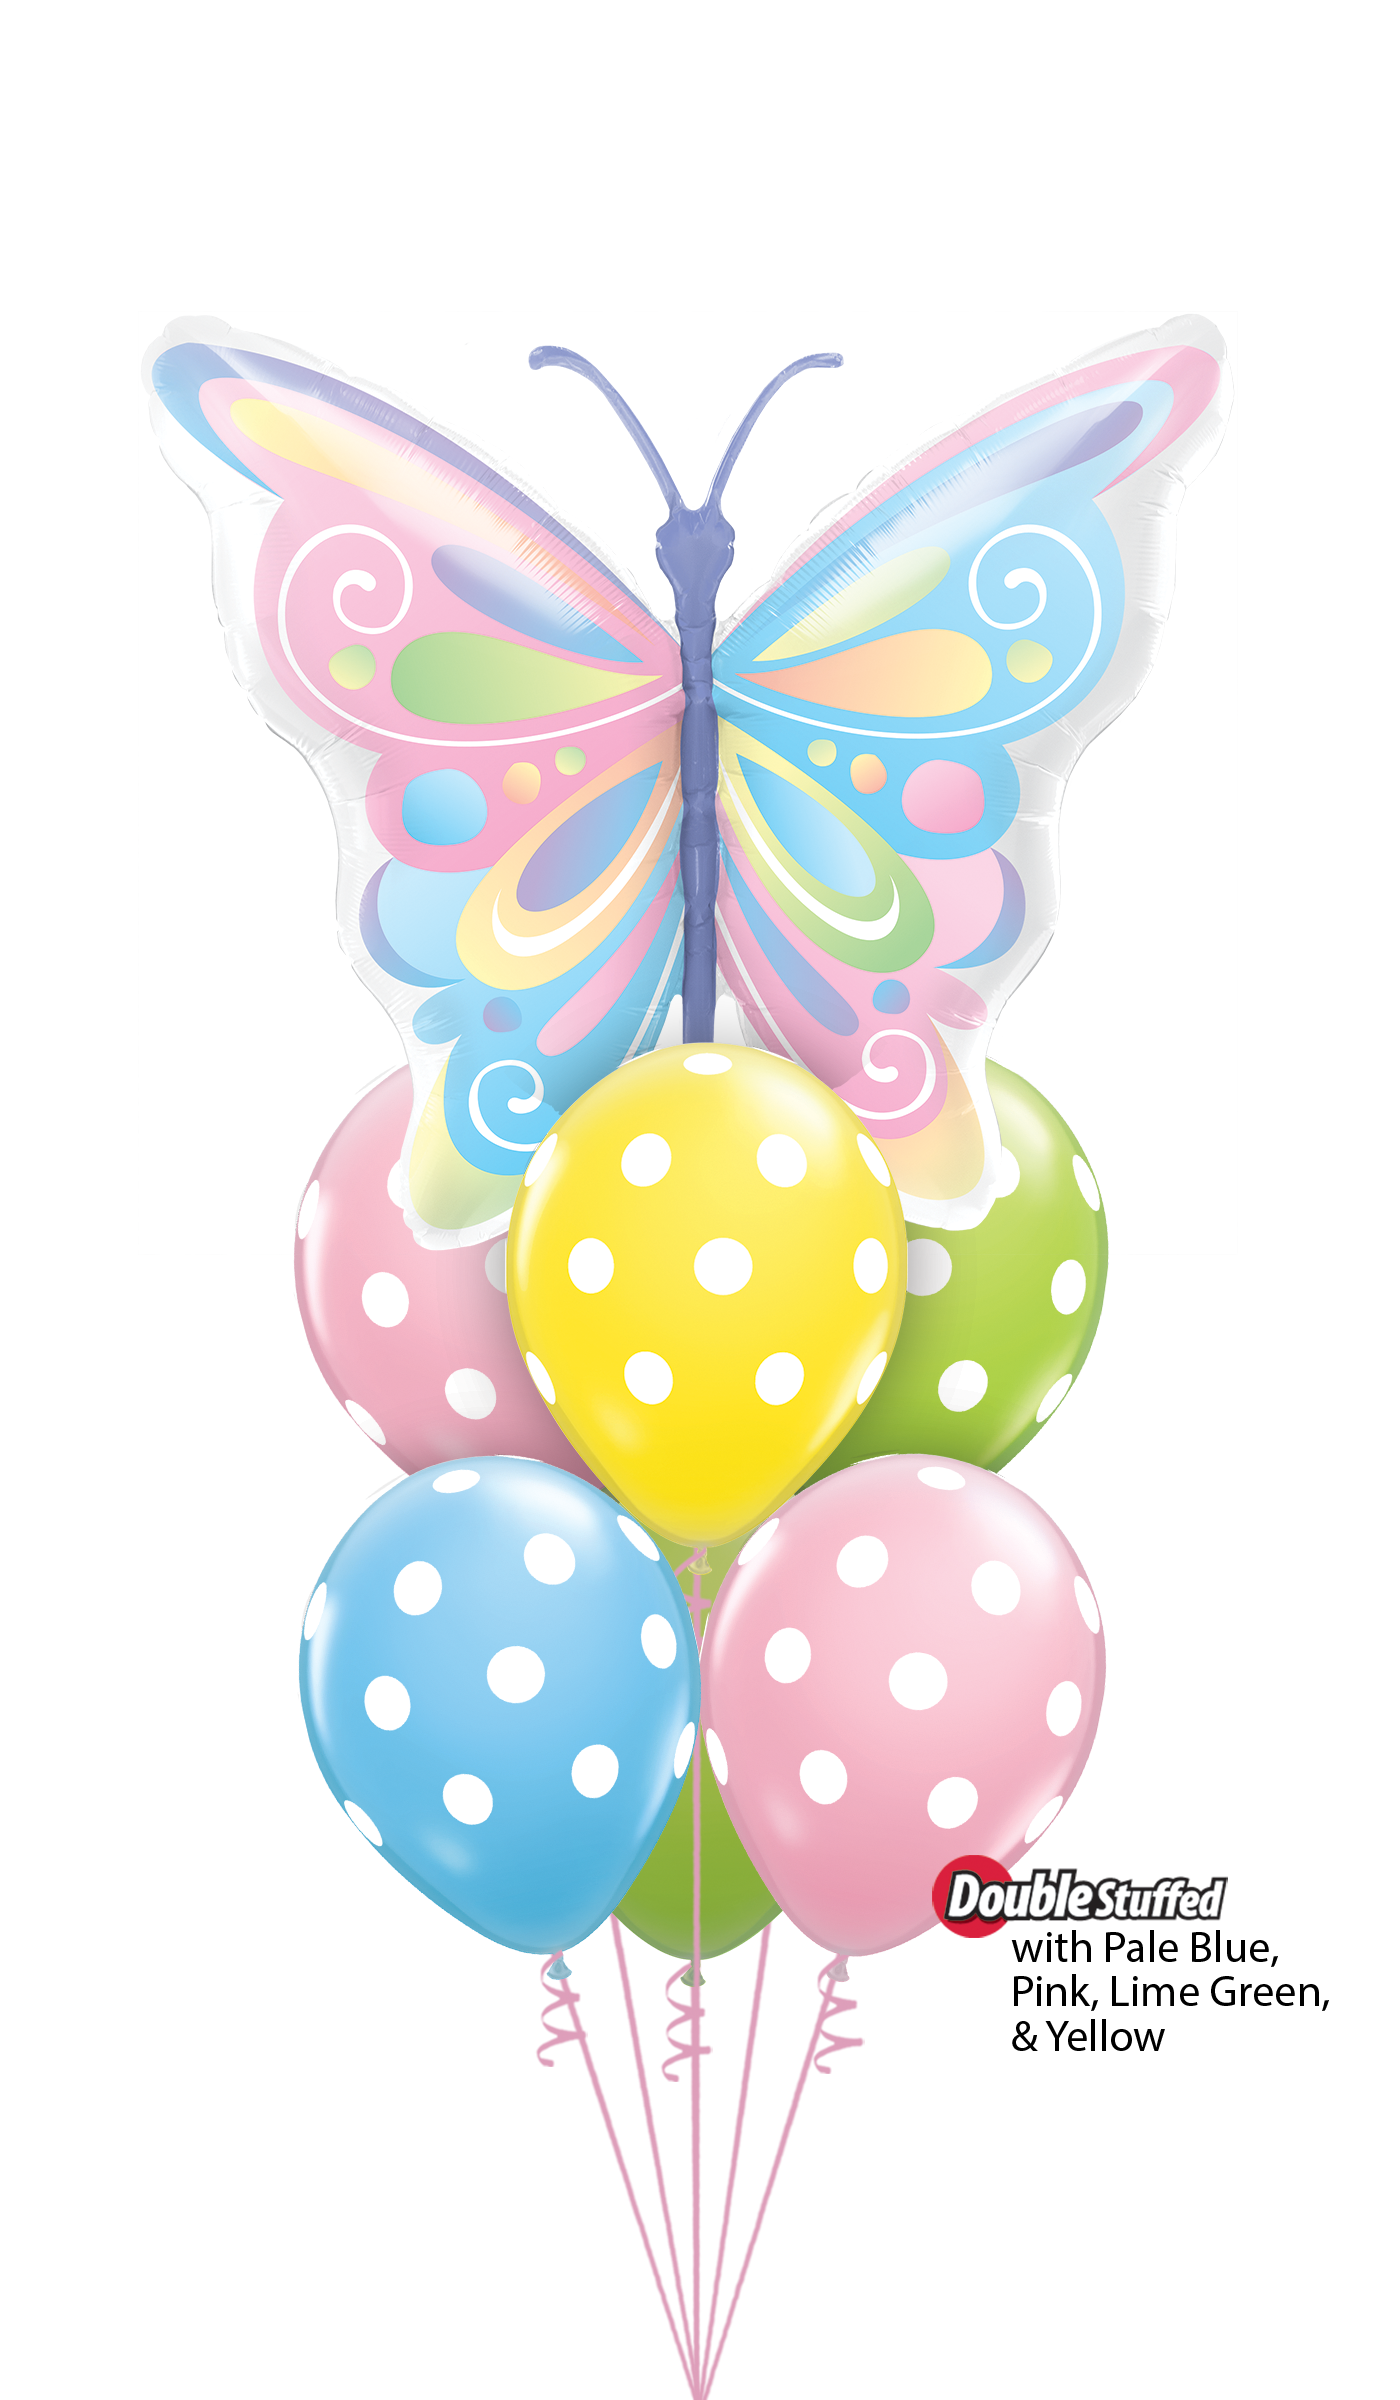 Easter balloons